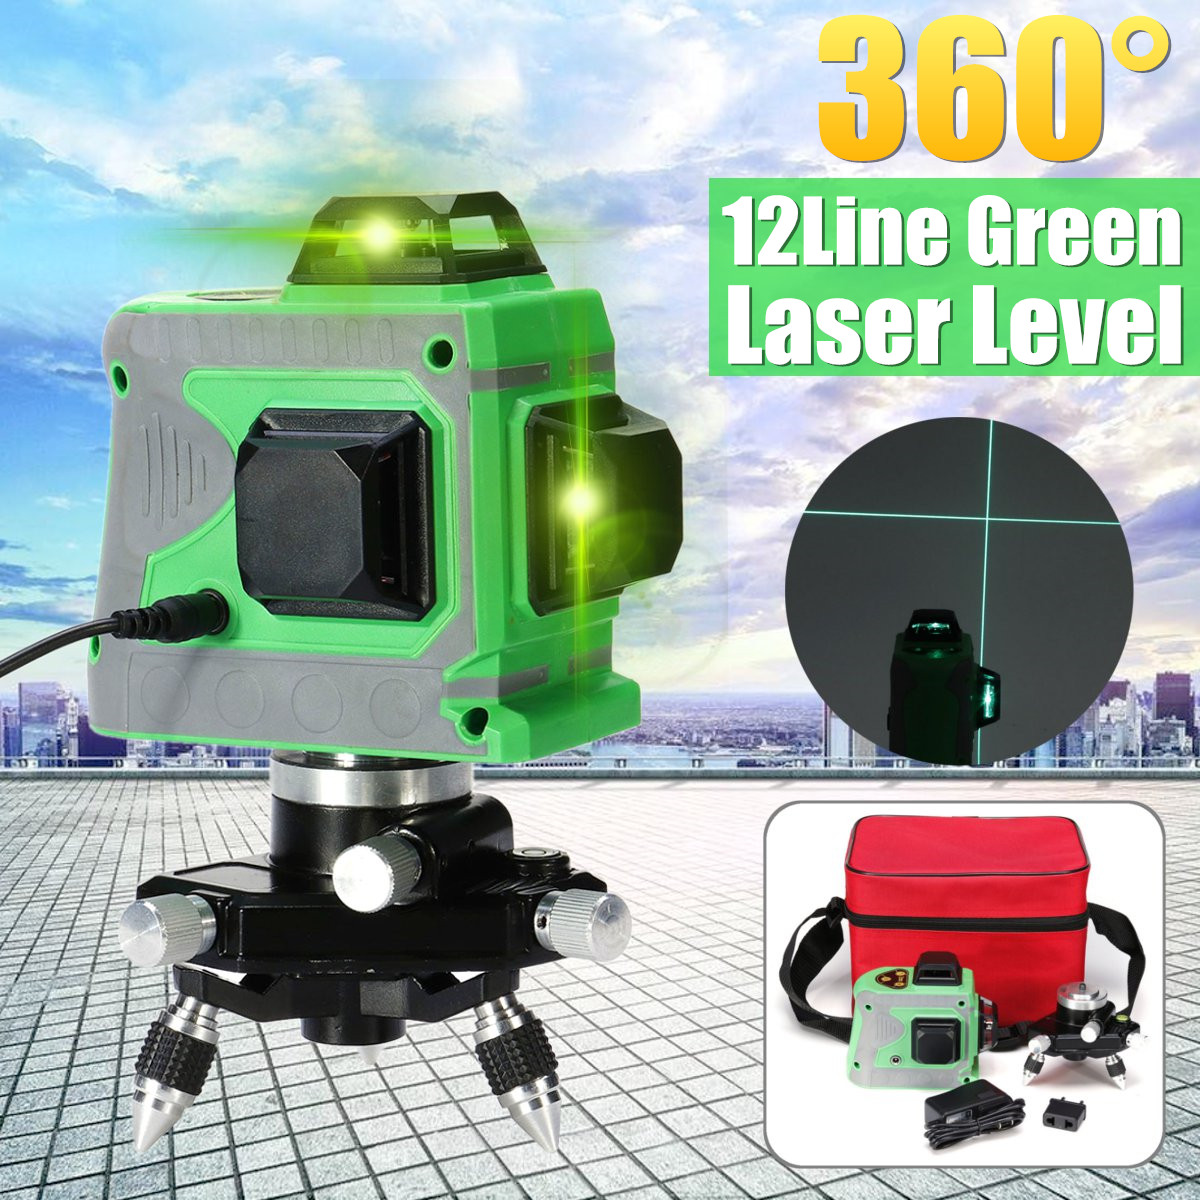 3D-12Line-Green-Laser-Level-Self-Leveling-360deg-Rotary-Cross-Outdoor-Measure-Tool-1642217-1